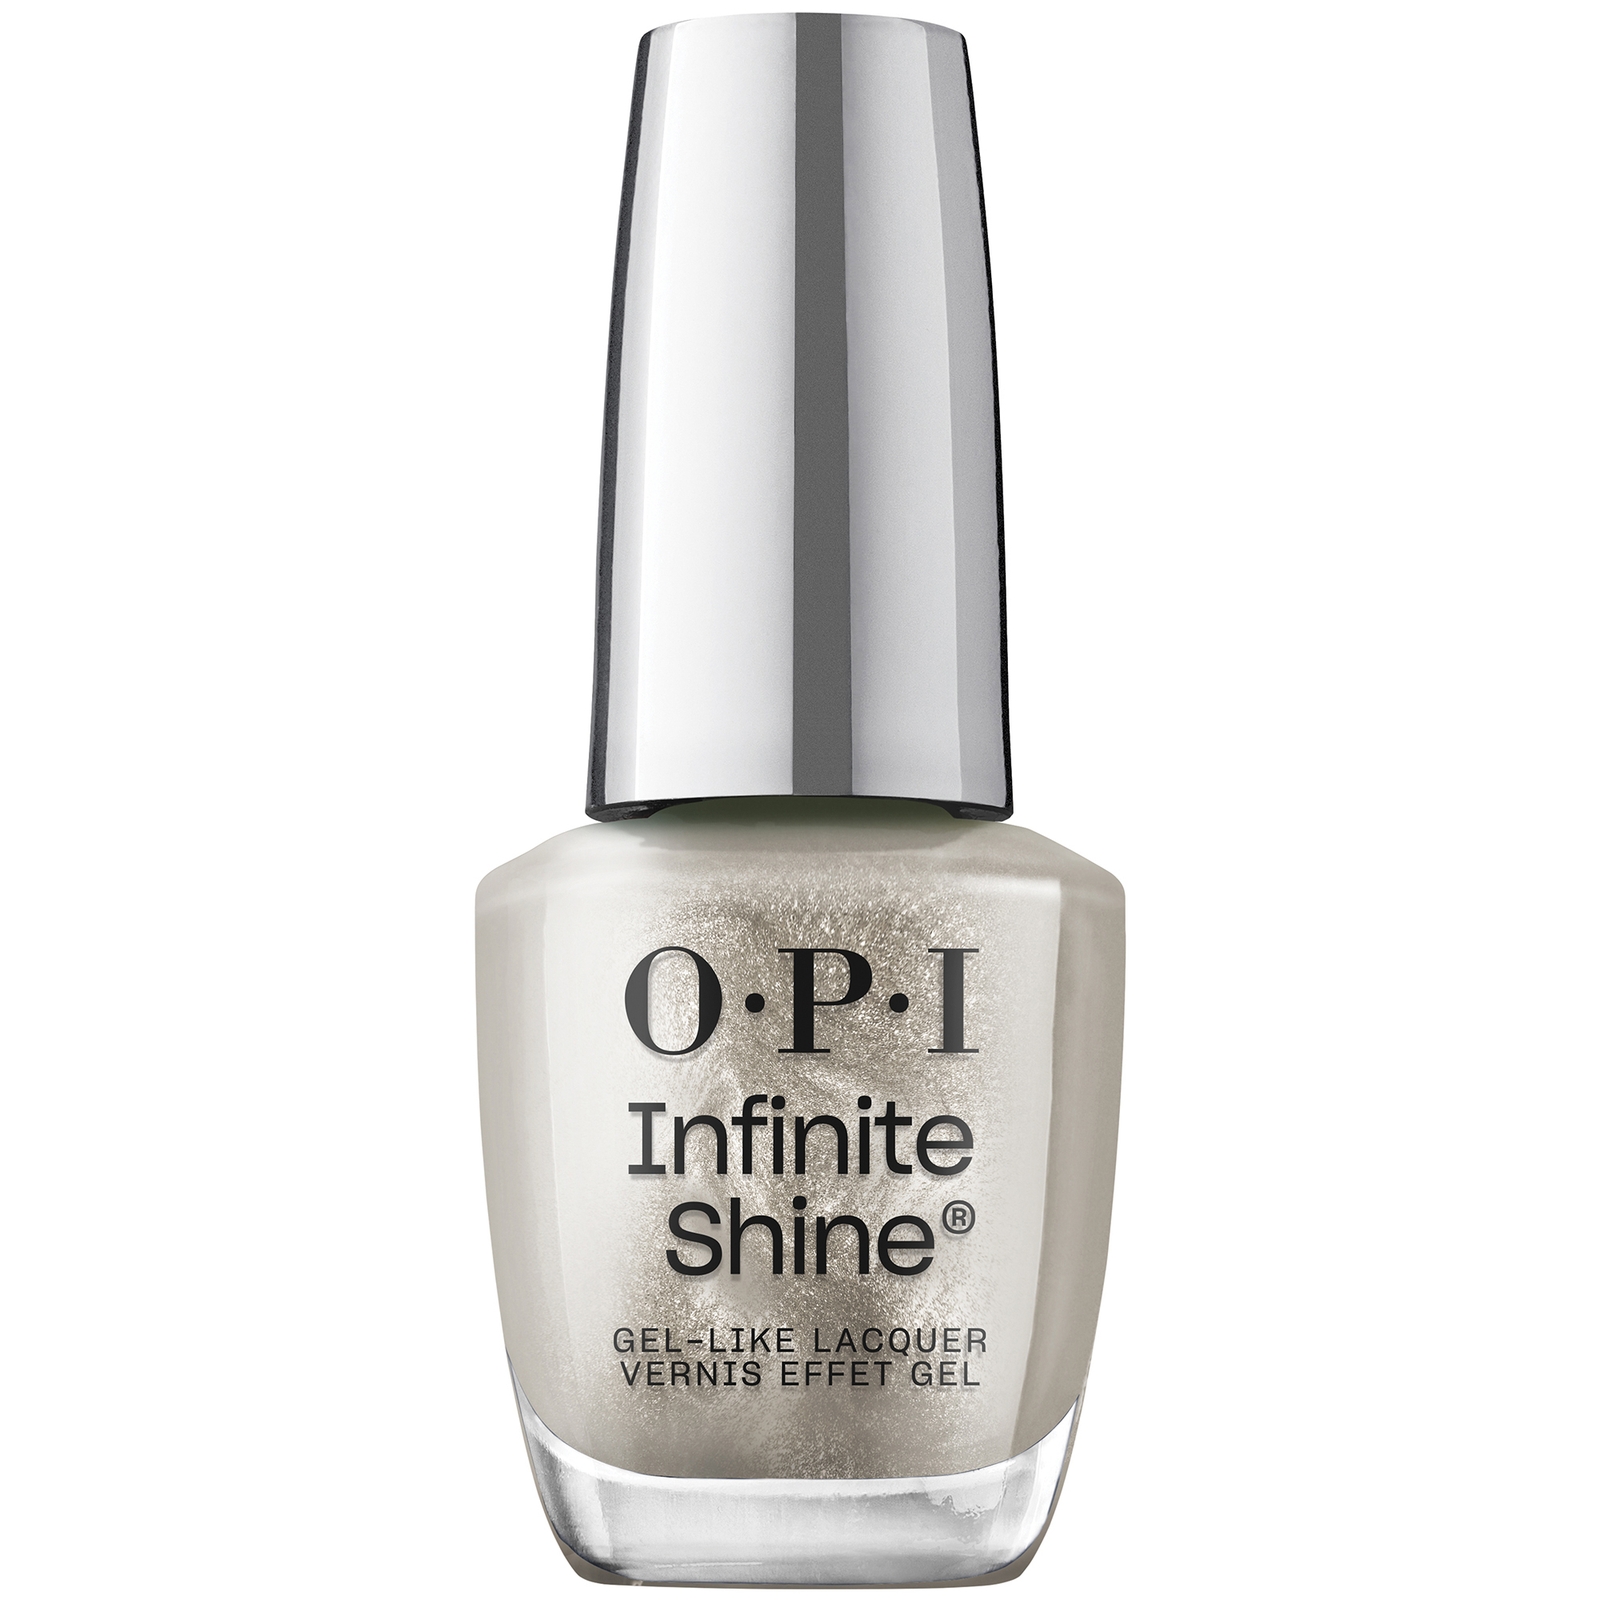 Opi Infinite Shine Long-wear Nail Polish - Work From Chrome 15ml